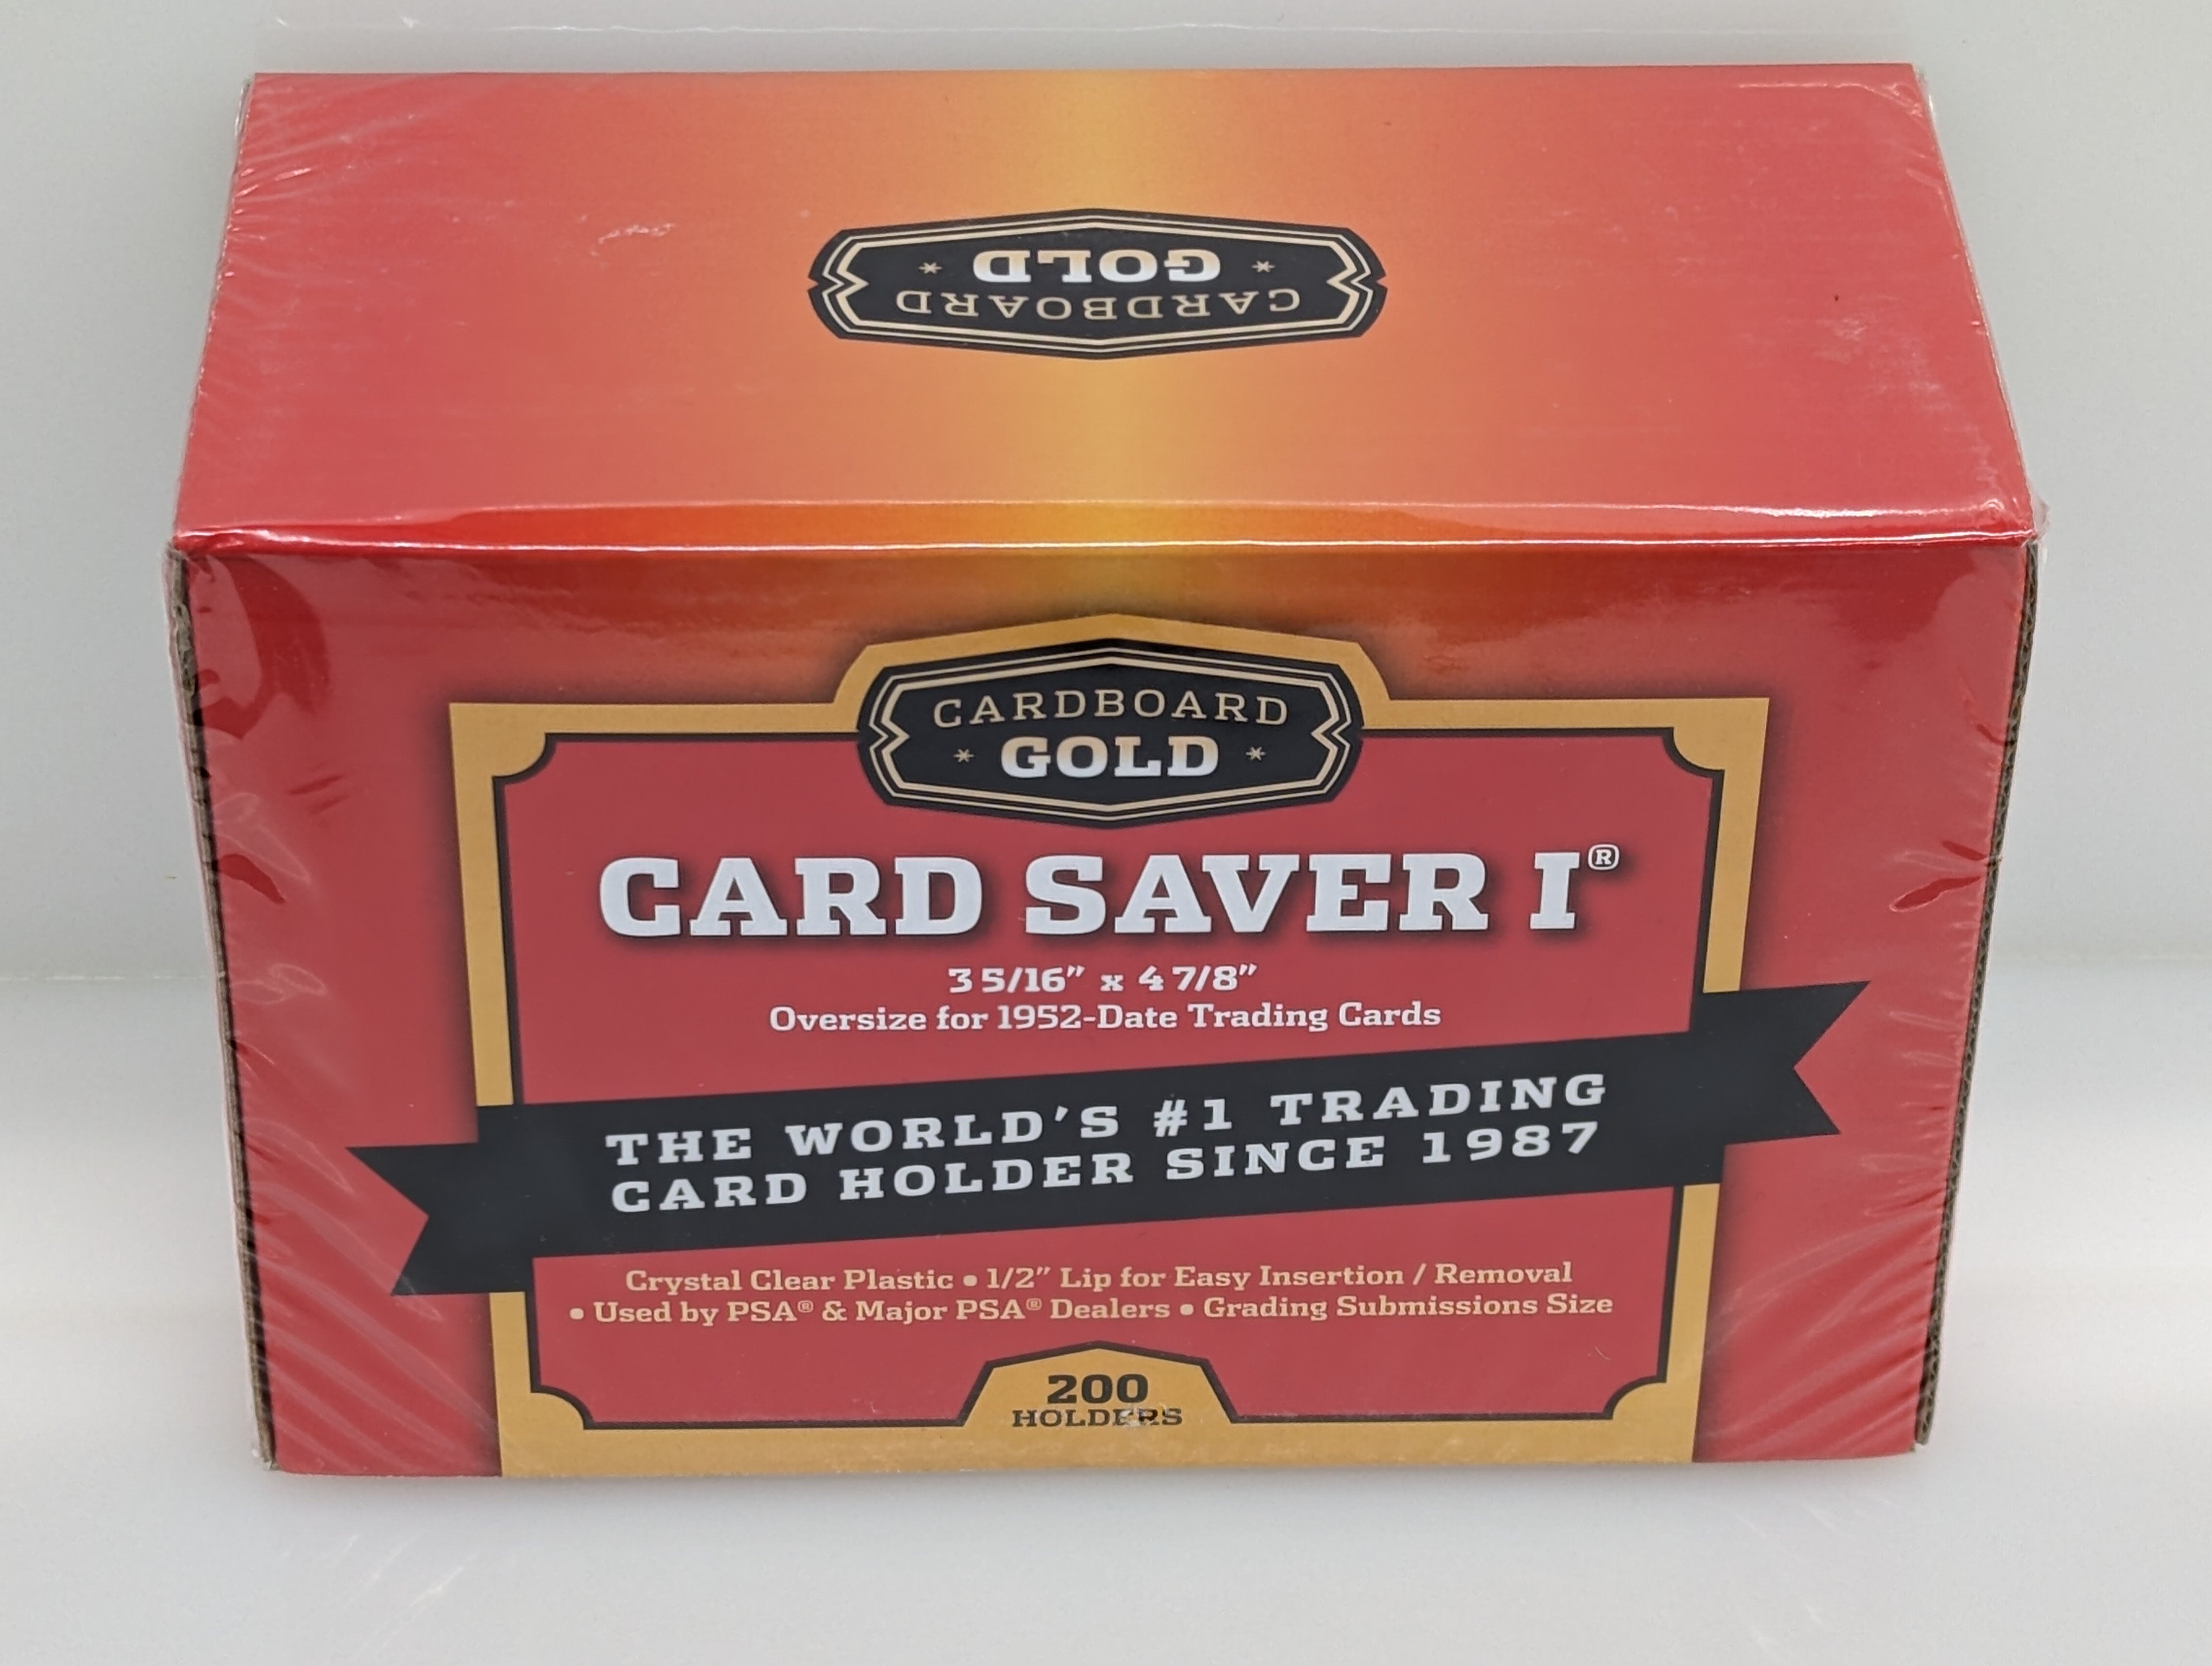 Cardboard Gold Card Saver 1 Semi Rigid Card Holder 3 5/16 x 4 7/8 (200  Count)